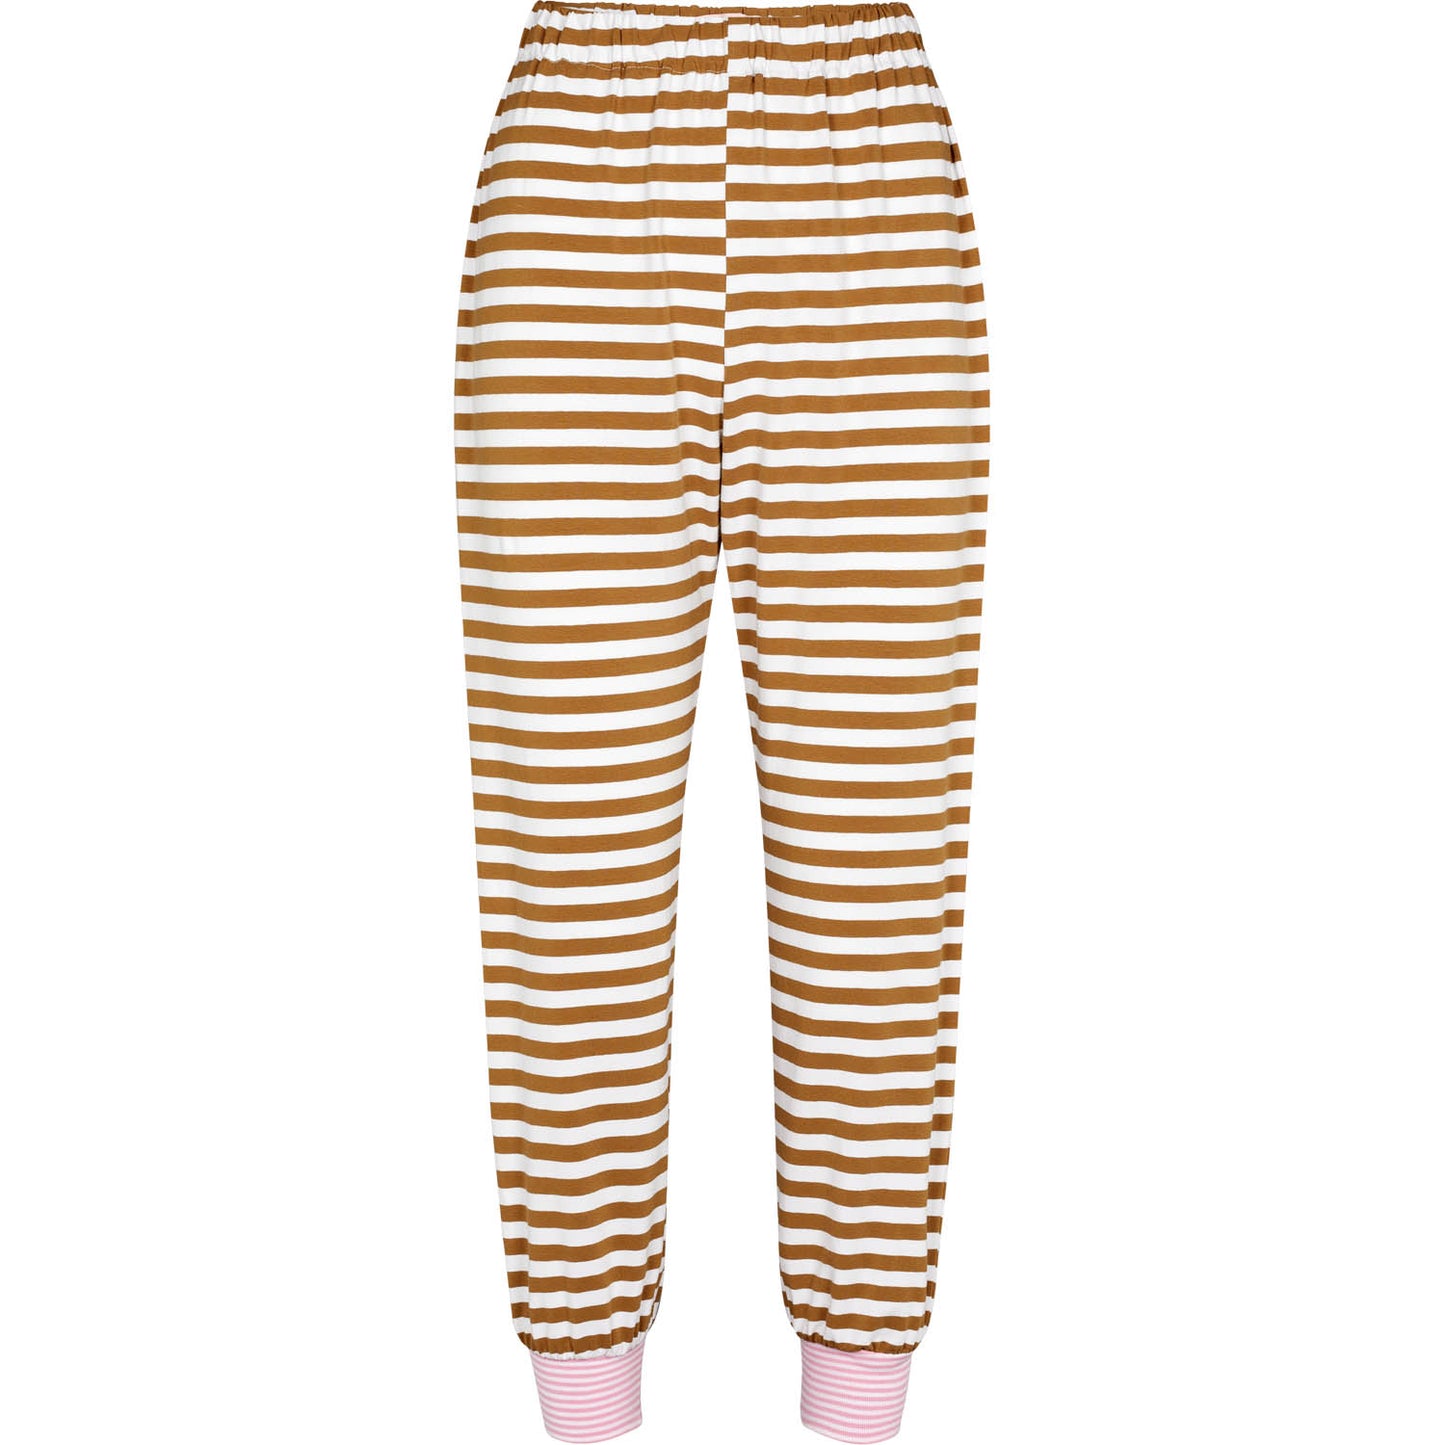 Tommy Slumber Pants - Caramel stripes and pink